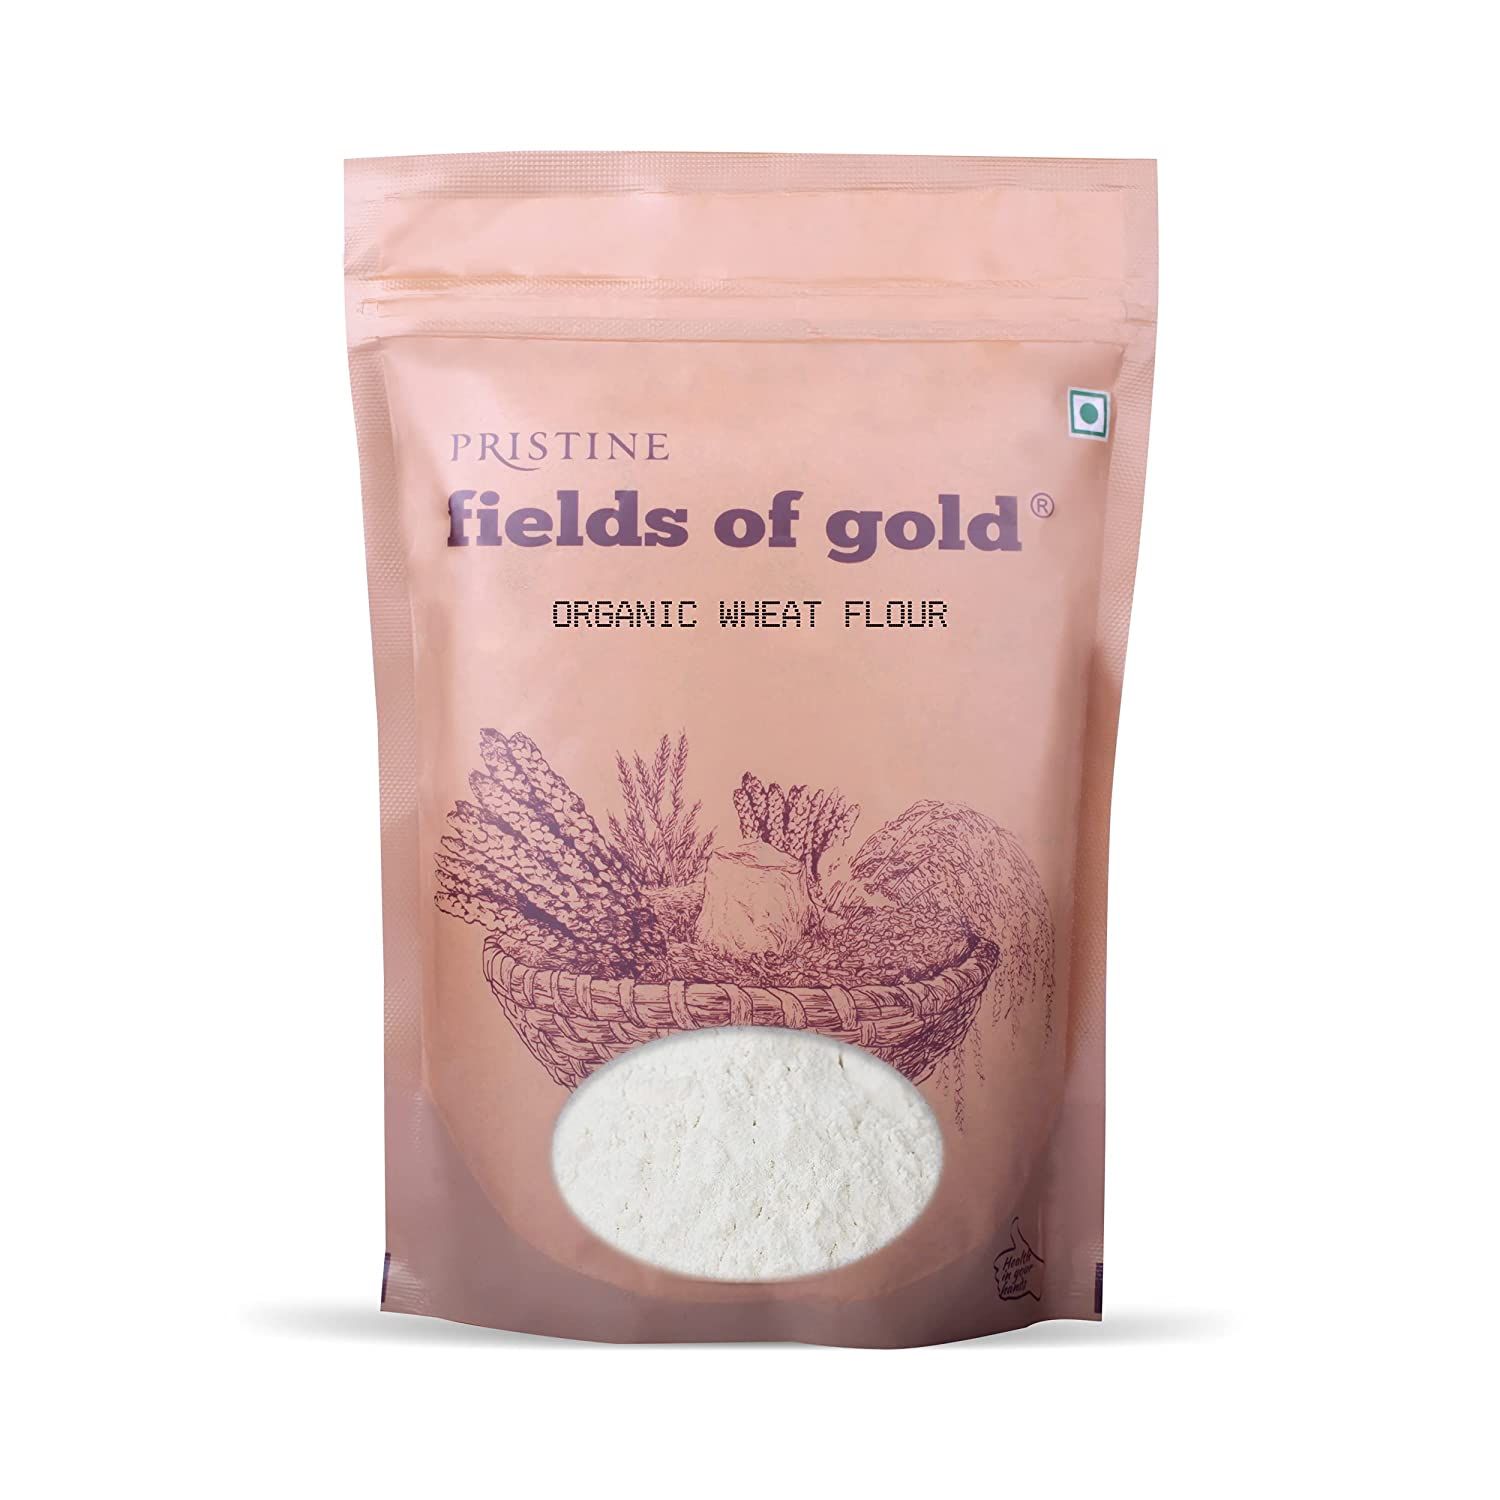 PRISTINE Fields of Gold Organic Wheat Flour Image